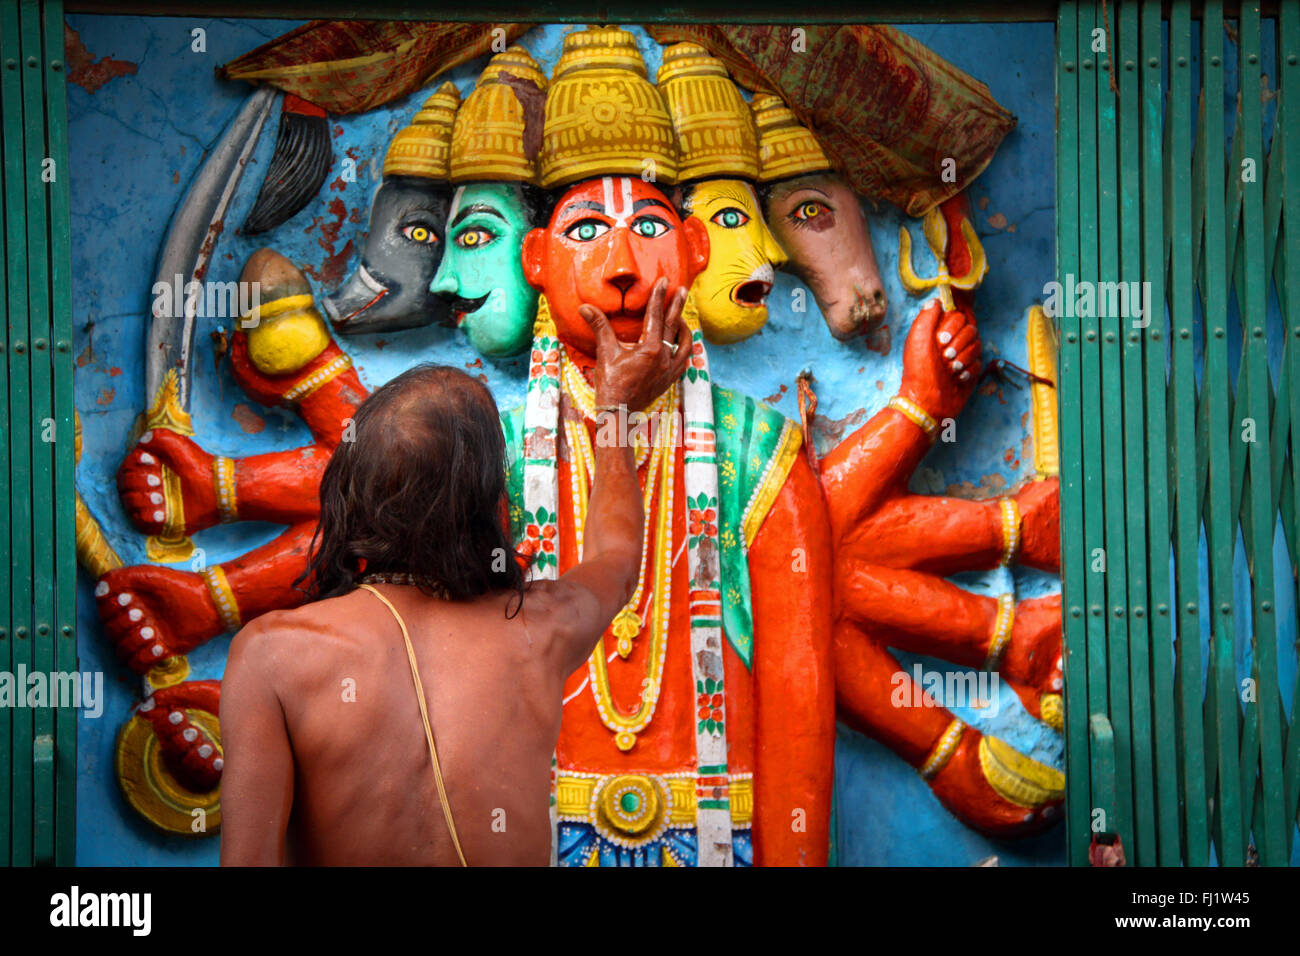 Hindu ritual in Varanasi, India - Stock Photo